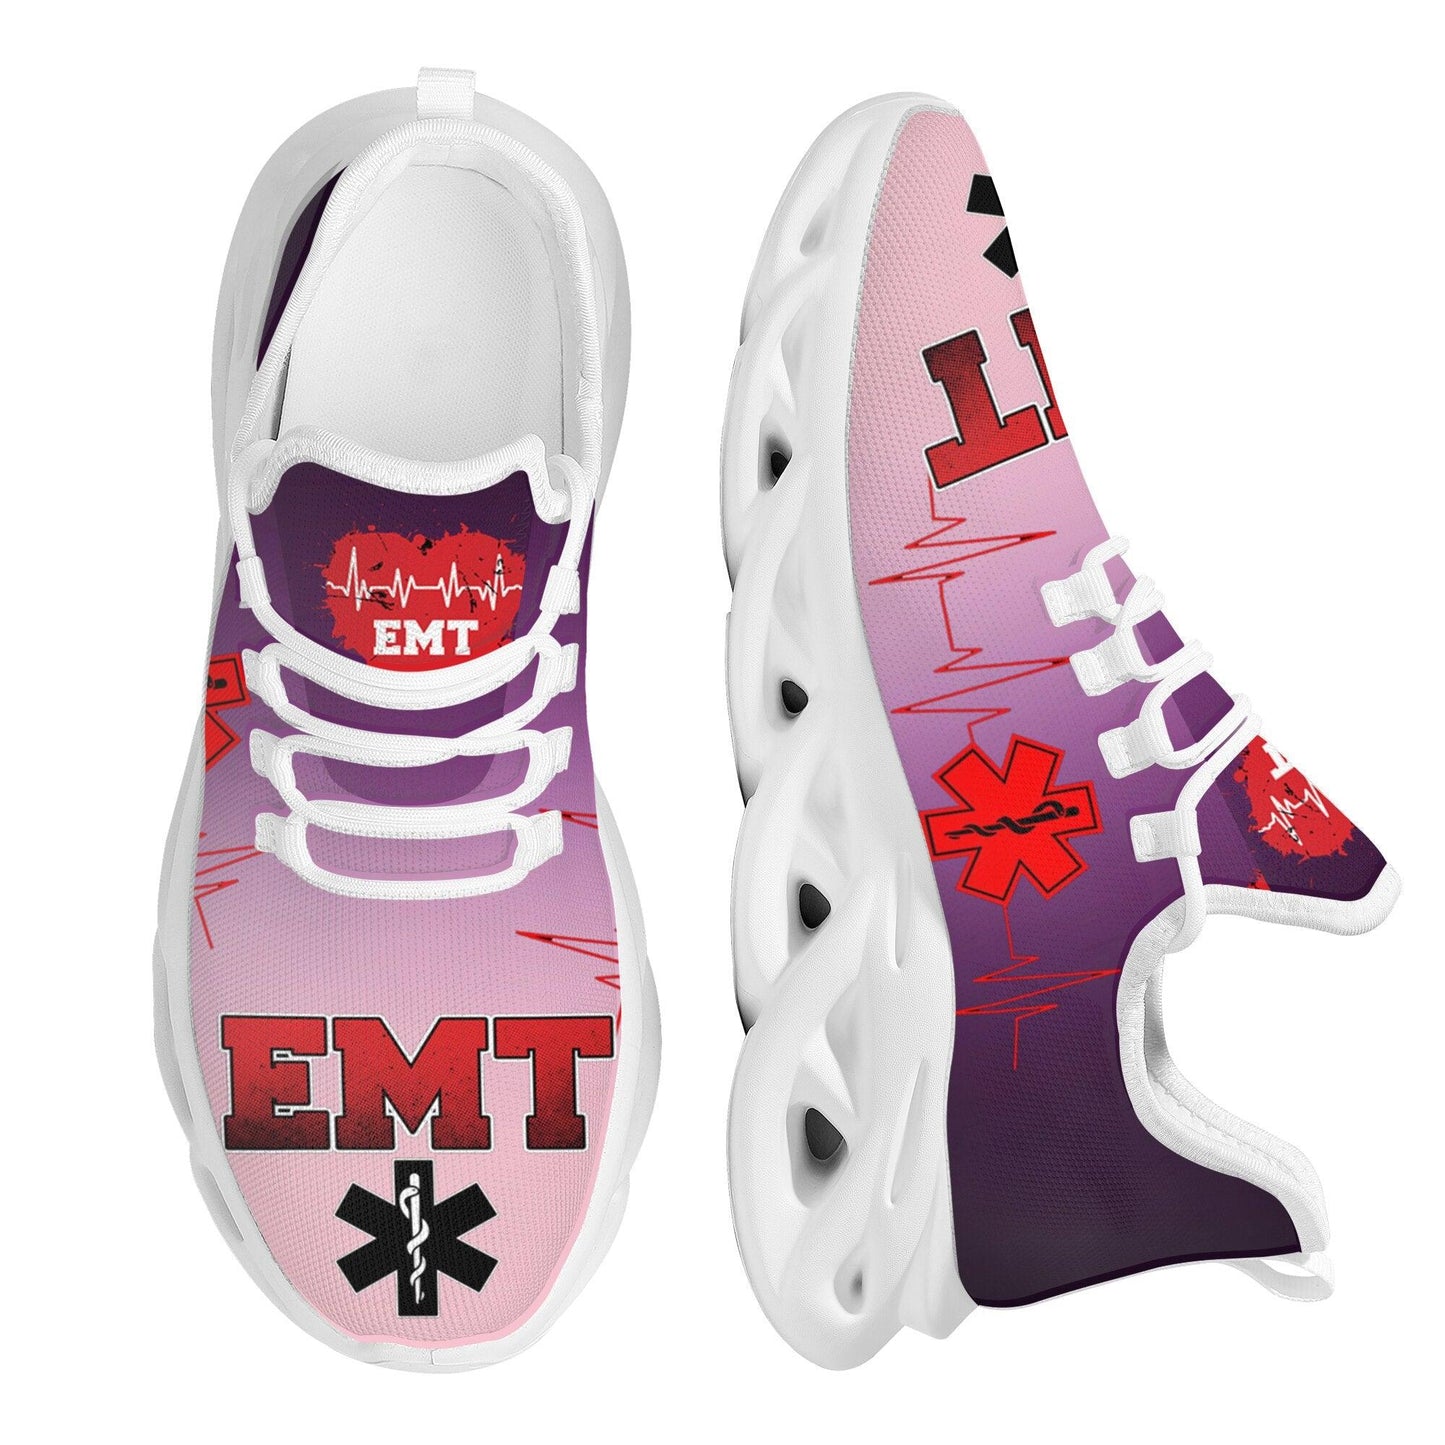 Paramedic EMT EMS Pattern Mesh Purple Sneakers for Women Breathable Footwear - Thumbedtreats